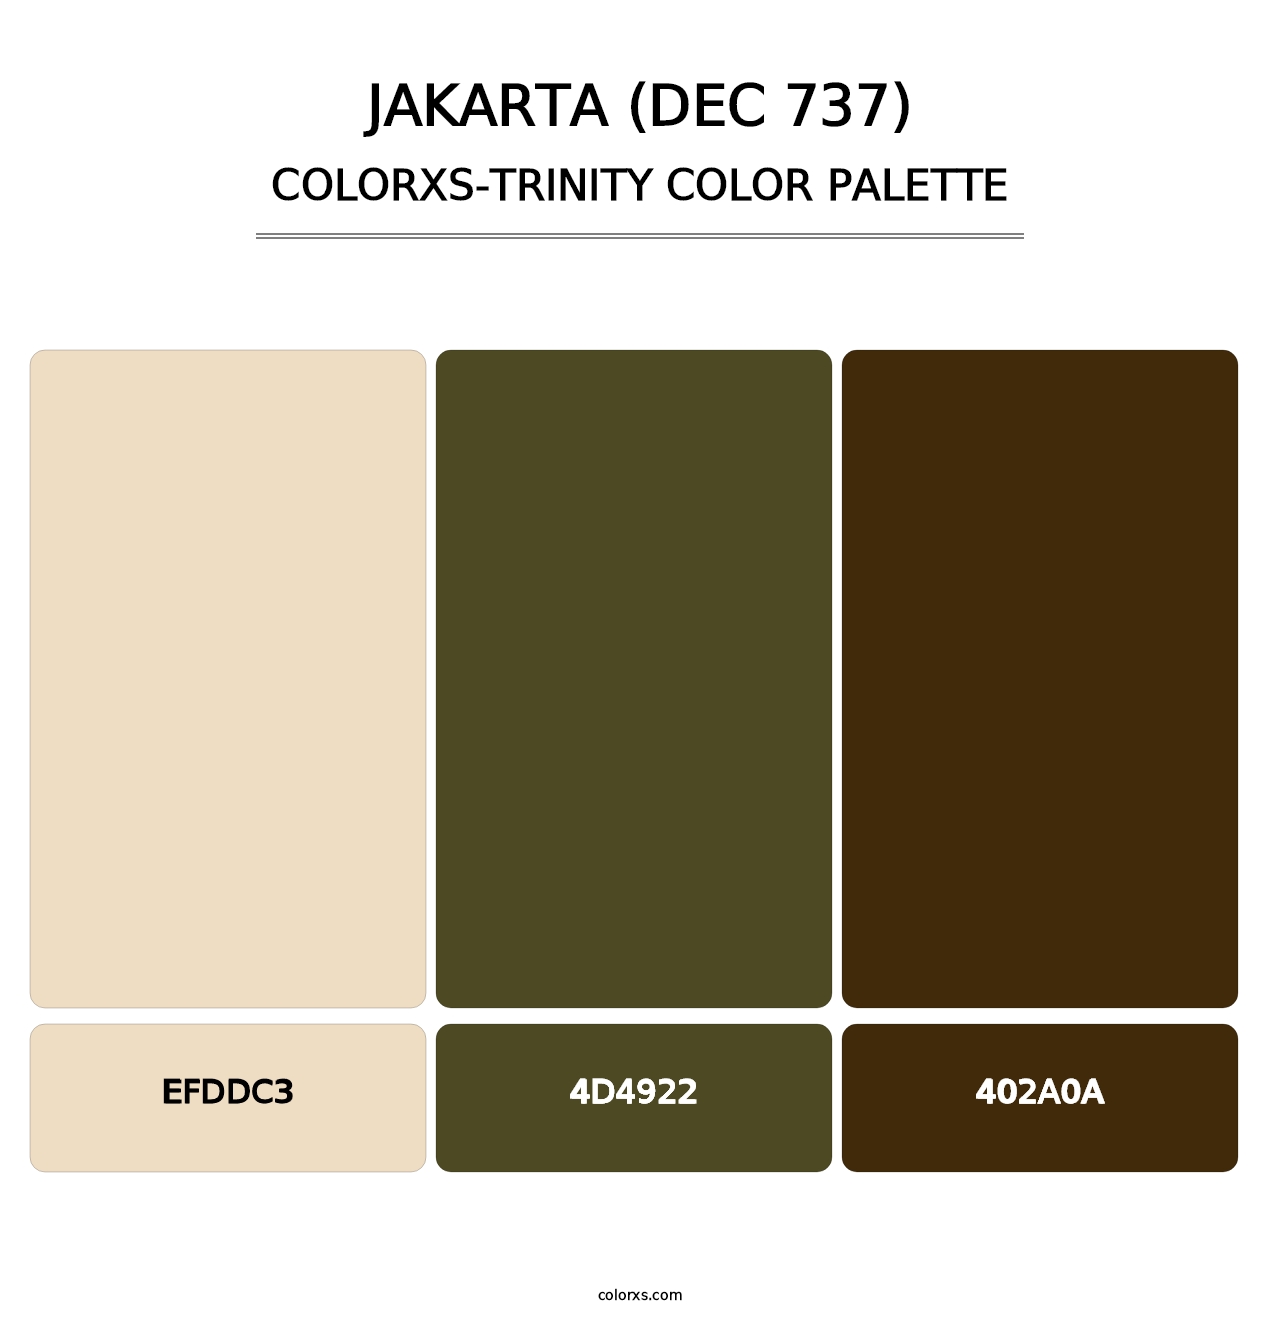 Jakarta (DEC 737) - Colorxs Trinity Palette